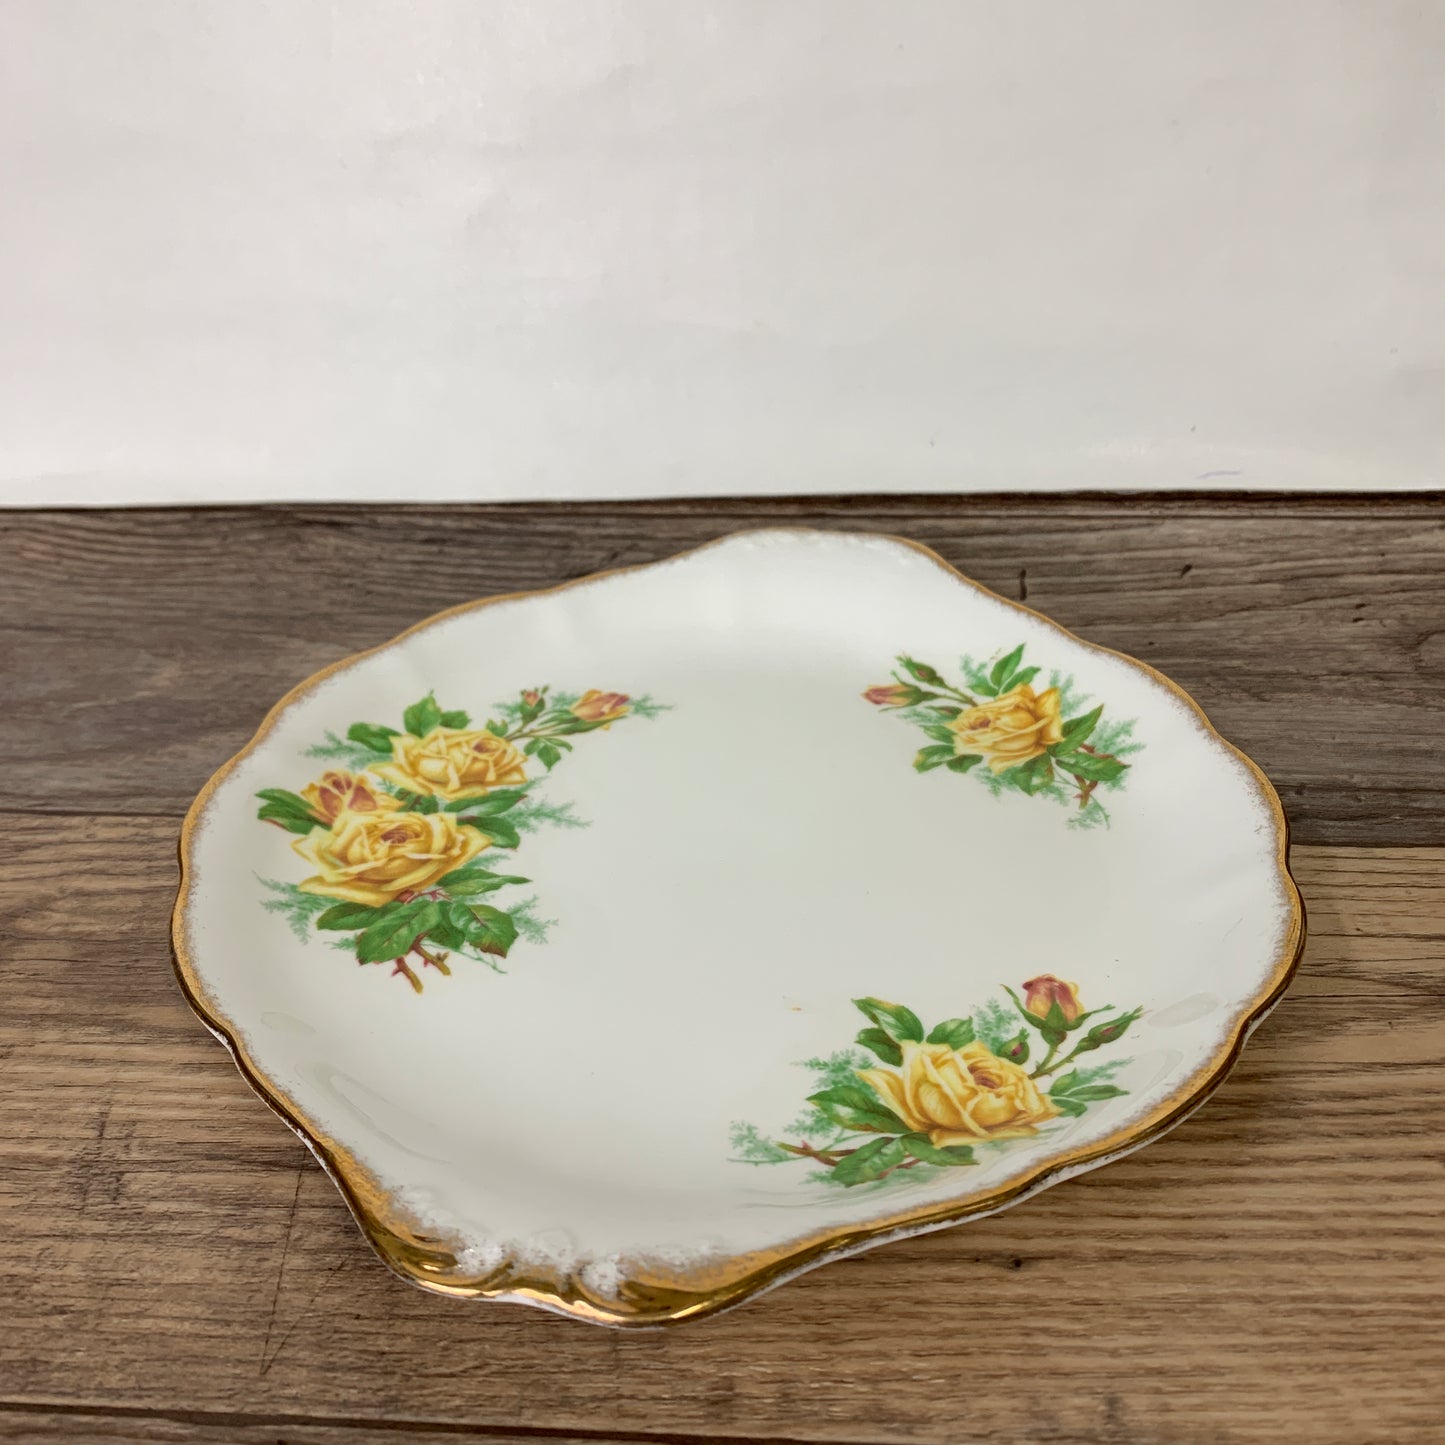 Royal Albert Tea Rose Cake Plate, Handled Cake Plate with Yellow Roses